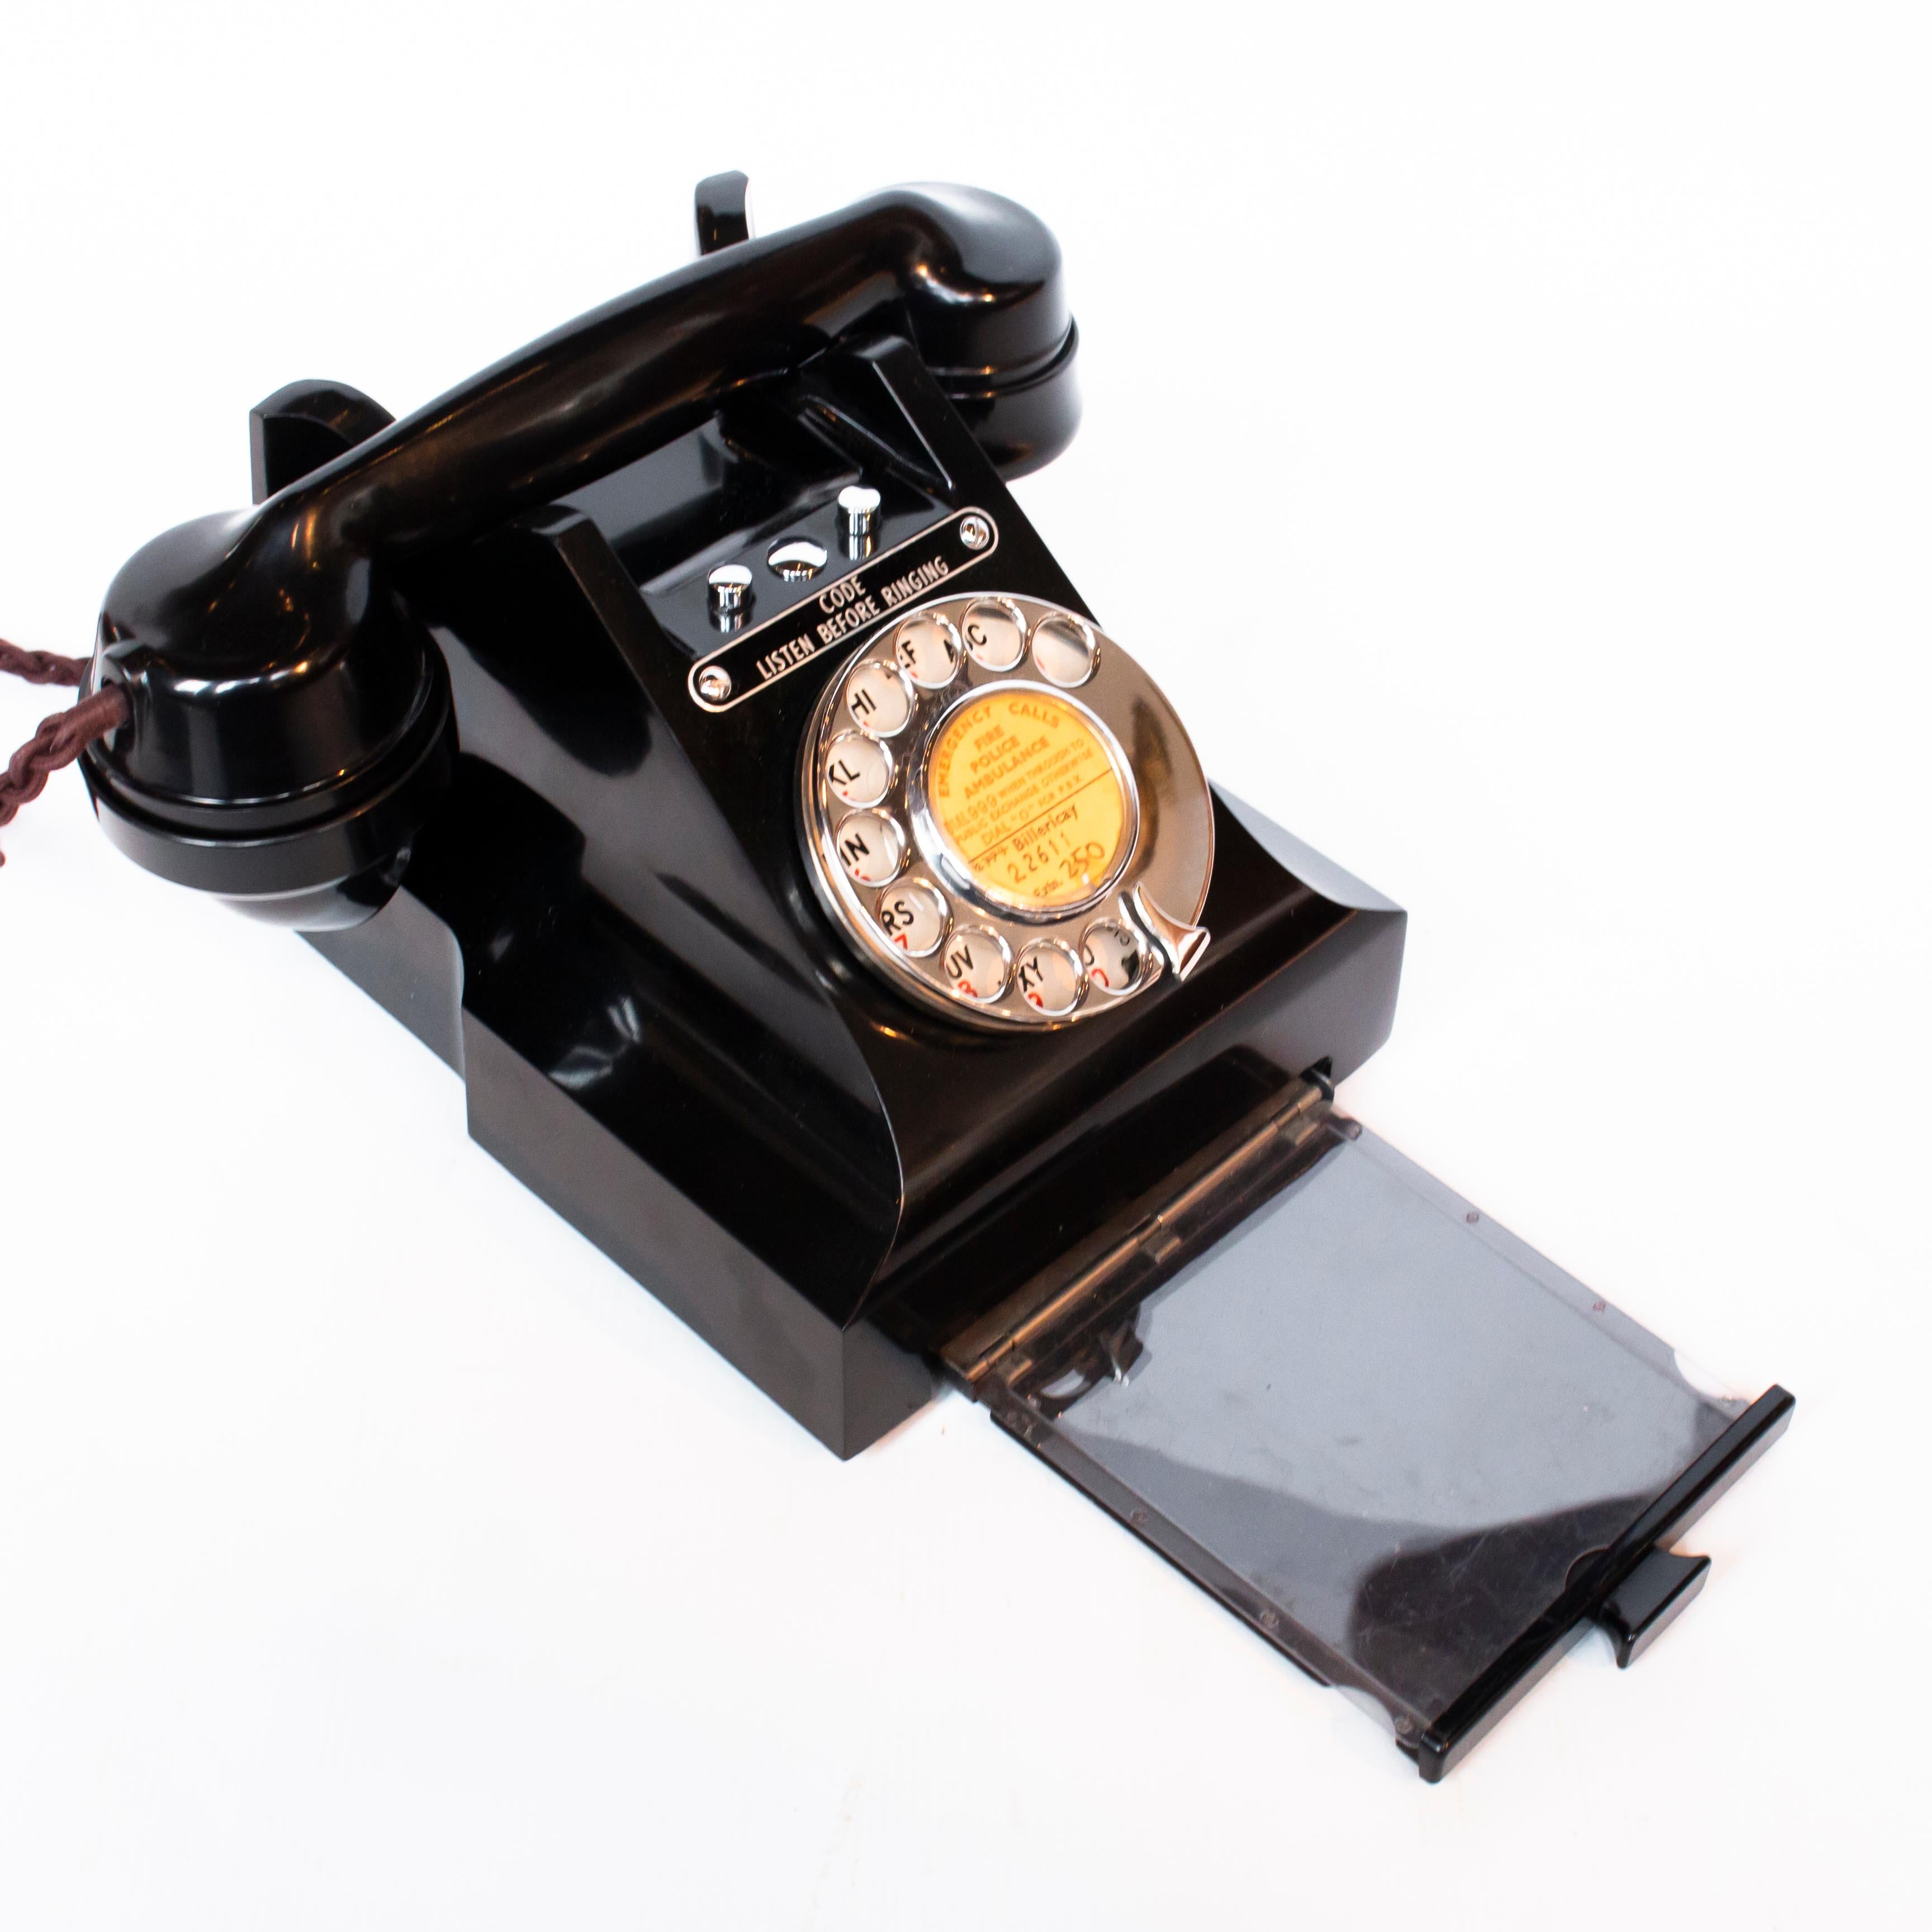 An original 1951 GPO model 332 telephone. 